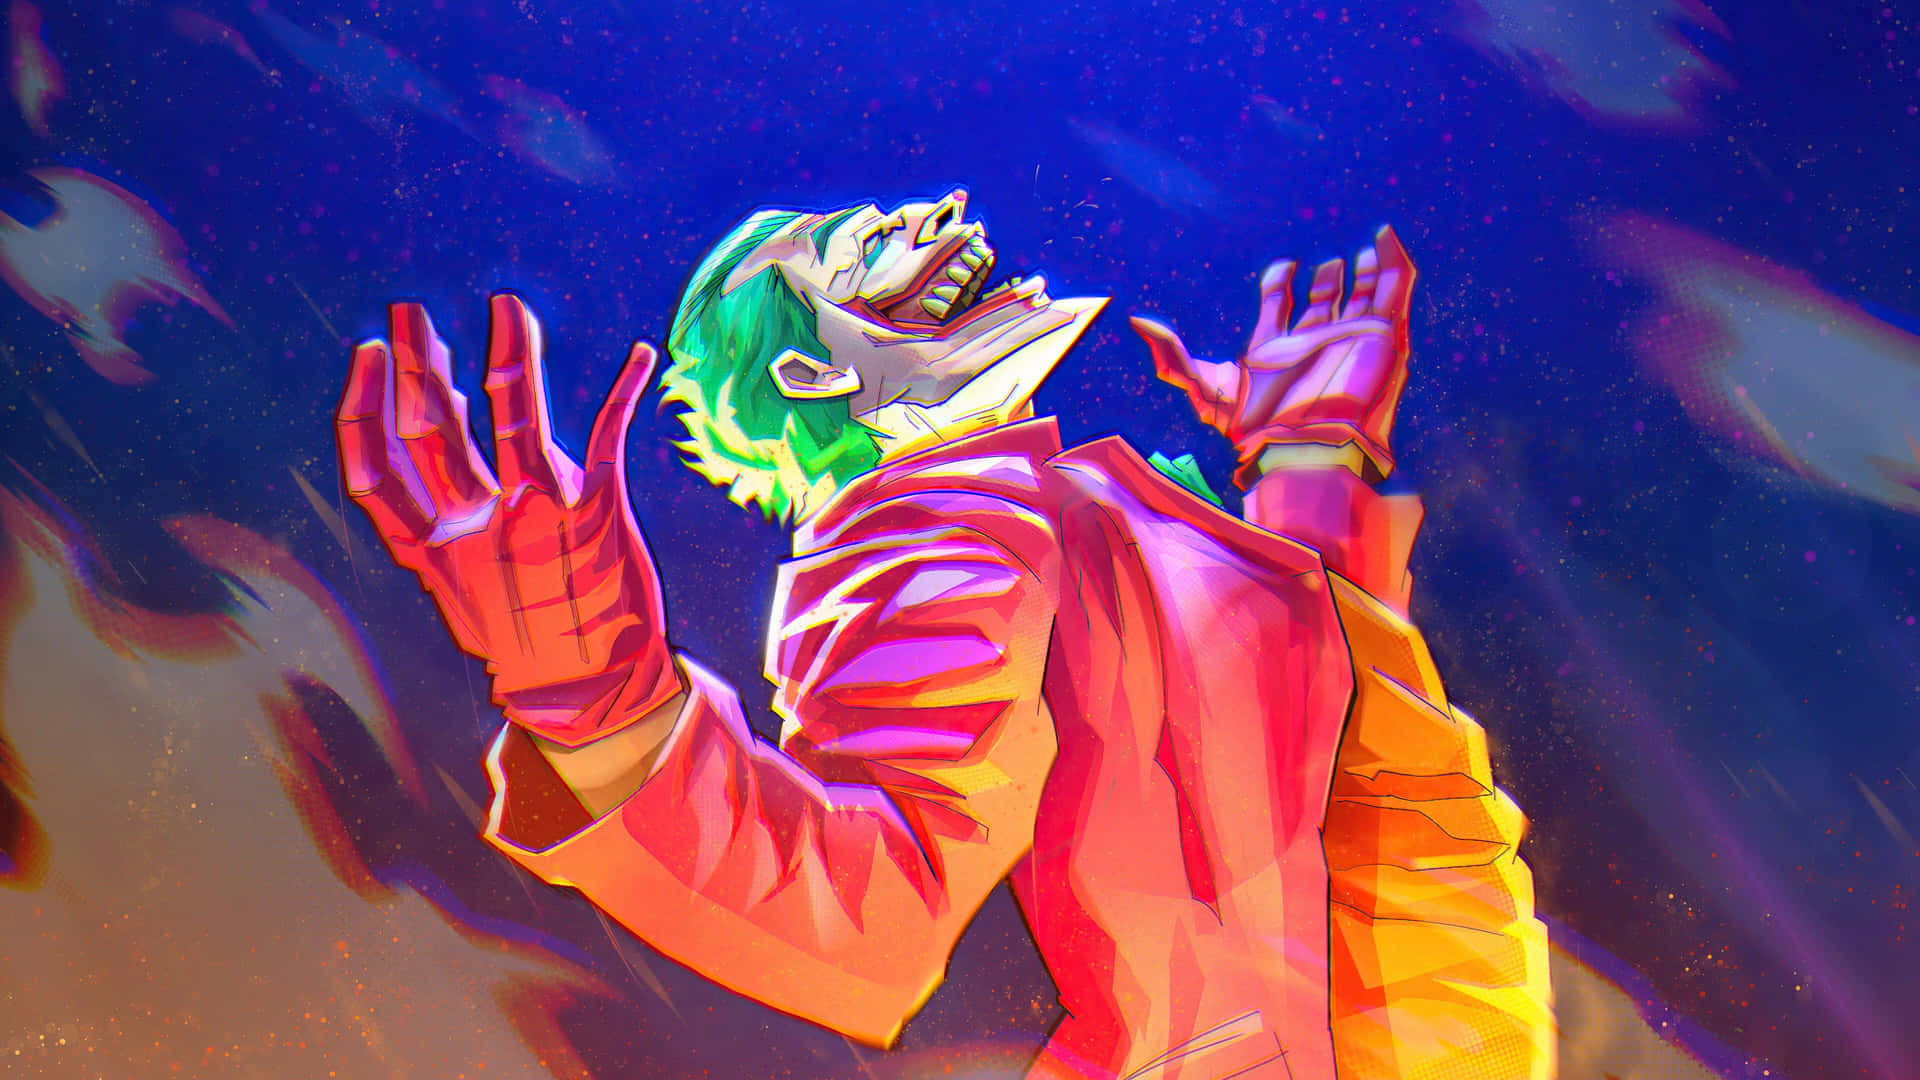 Sinister Smile, Unmasked Chaos - The Joker